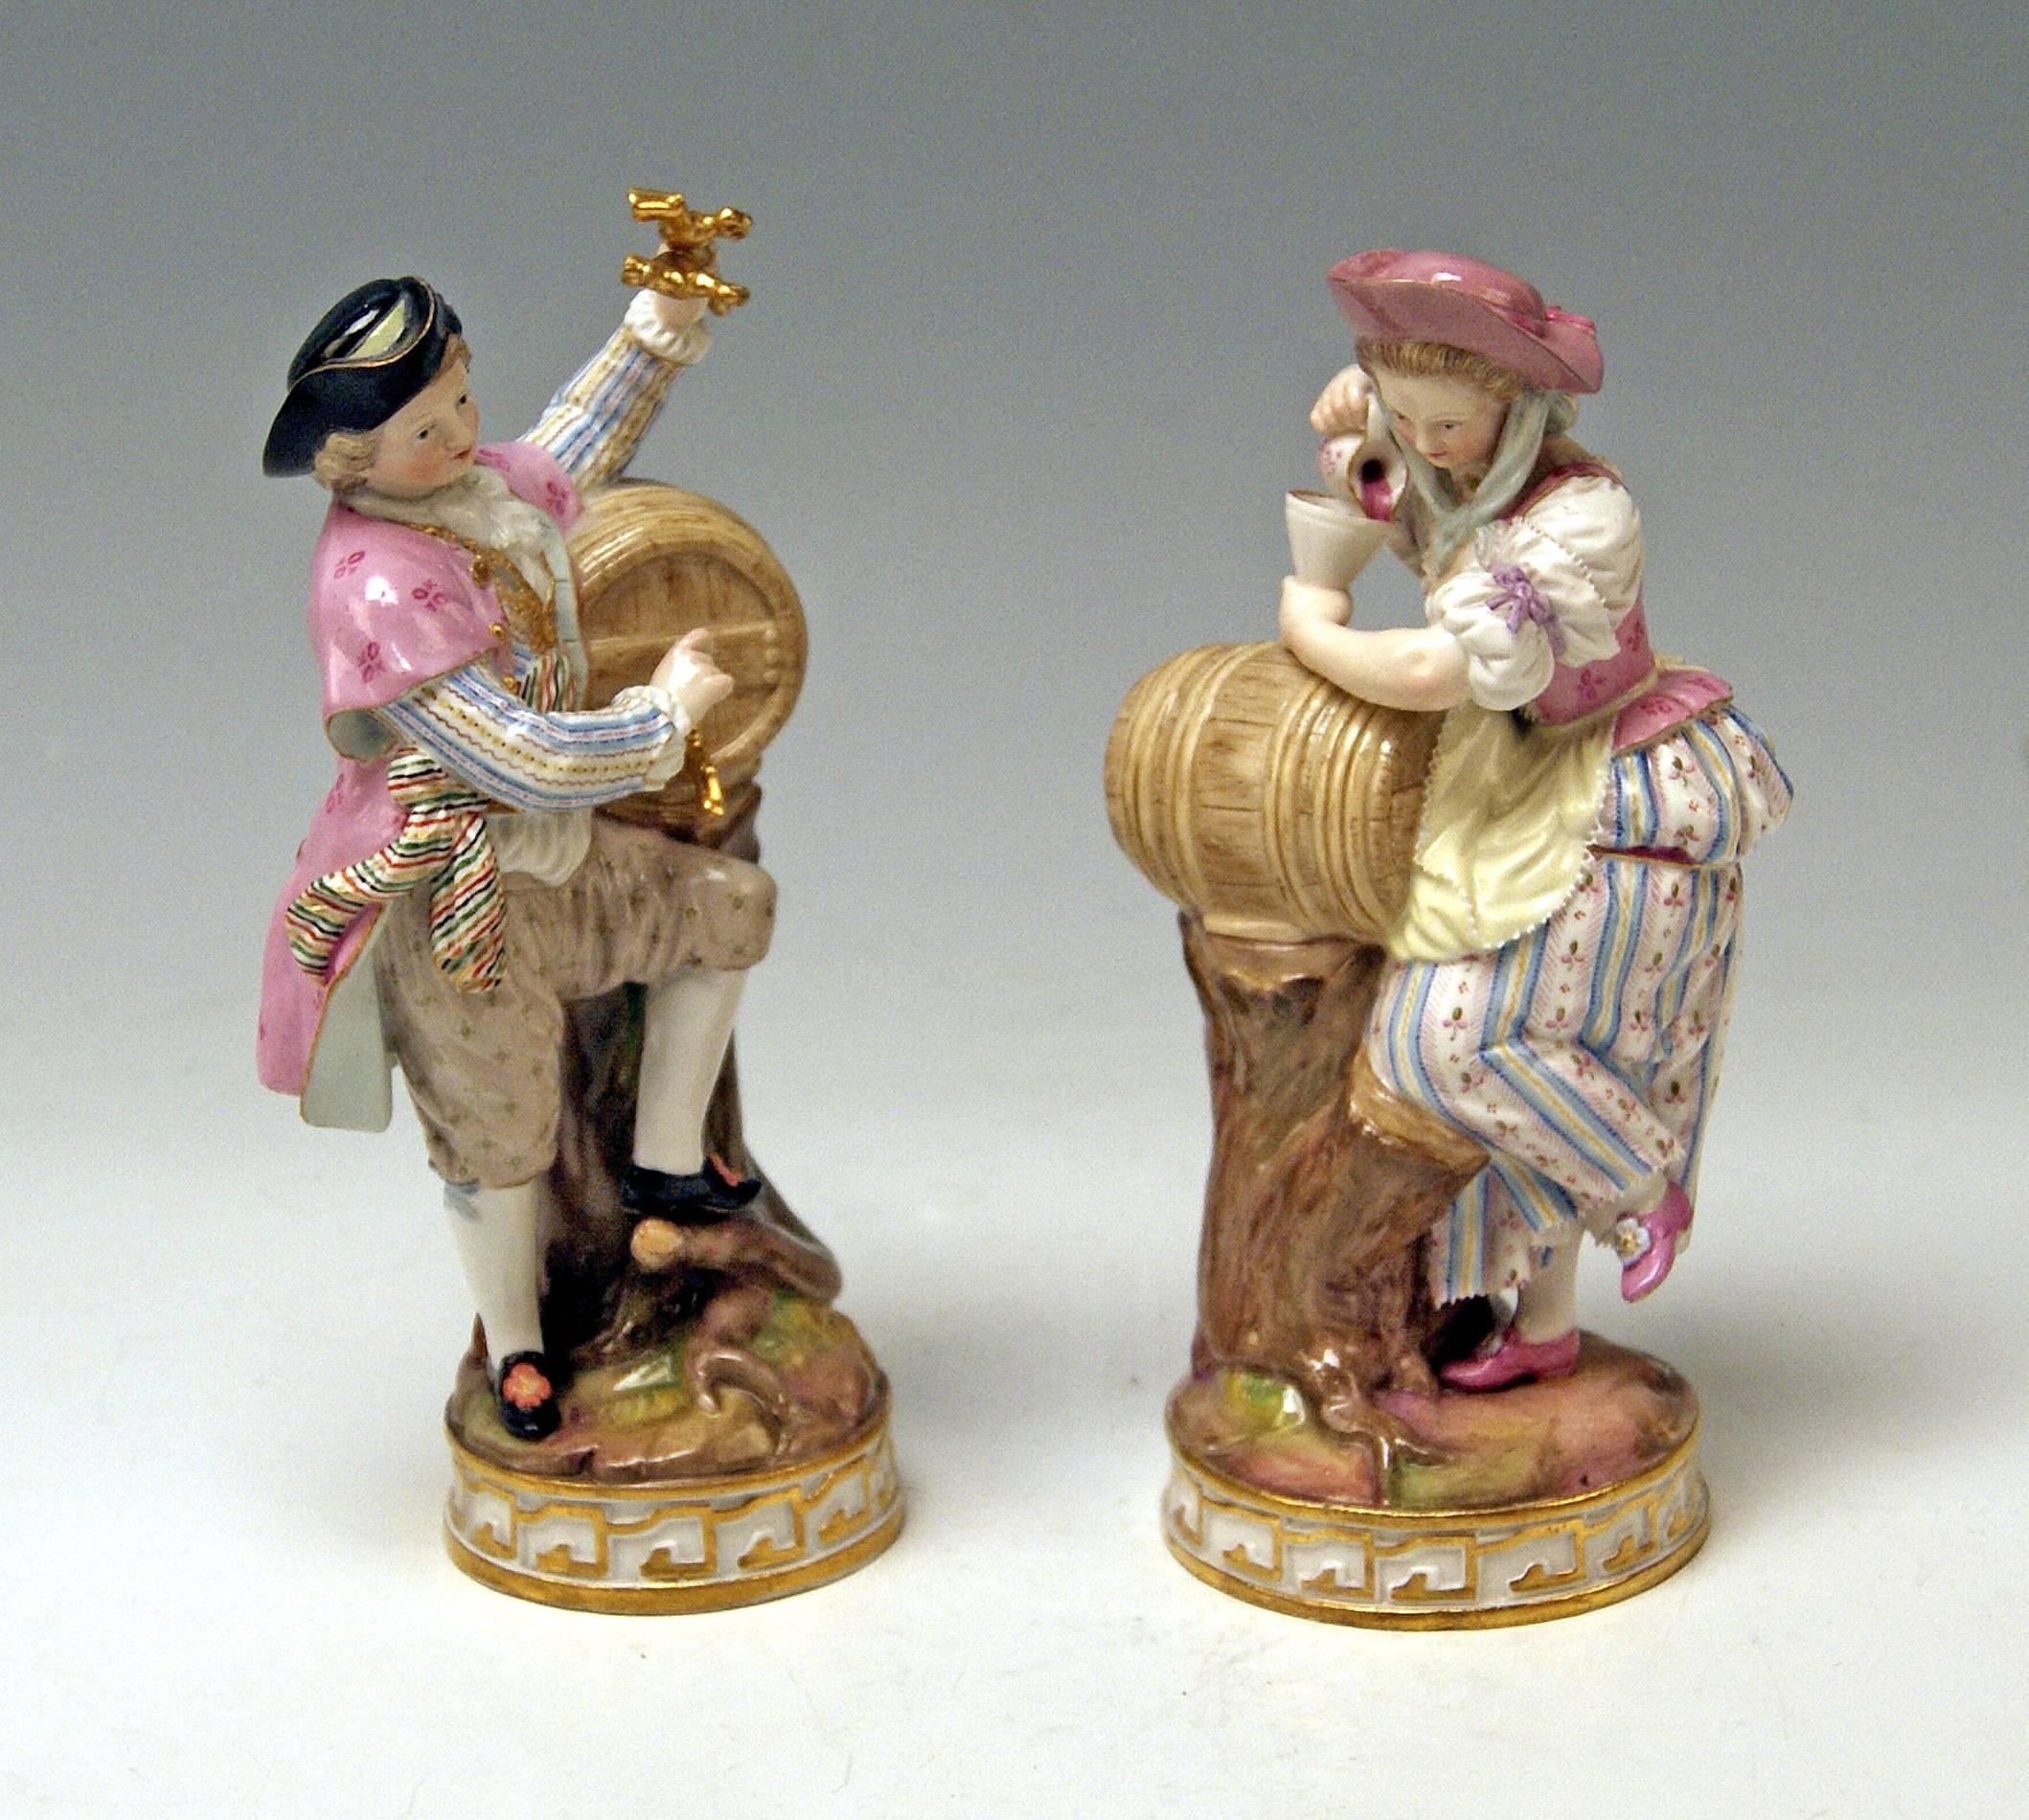 Meissen superb figurine group by Michel Victor Acier (designed, circa 1778).
Pair of wine-growers: Male as well as female figurine.

Designer:
Michel Victor Acier (born 1736 in Versailles/France, died 1799 in Dresden).
Acier was a French